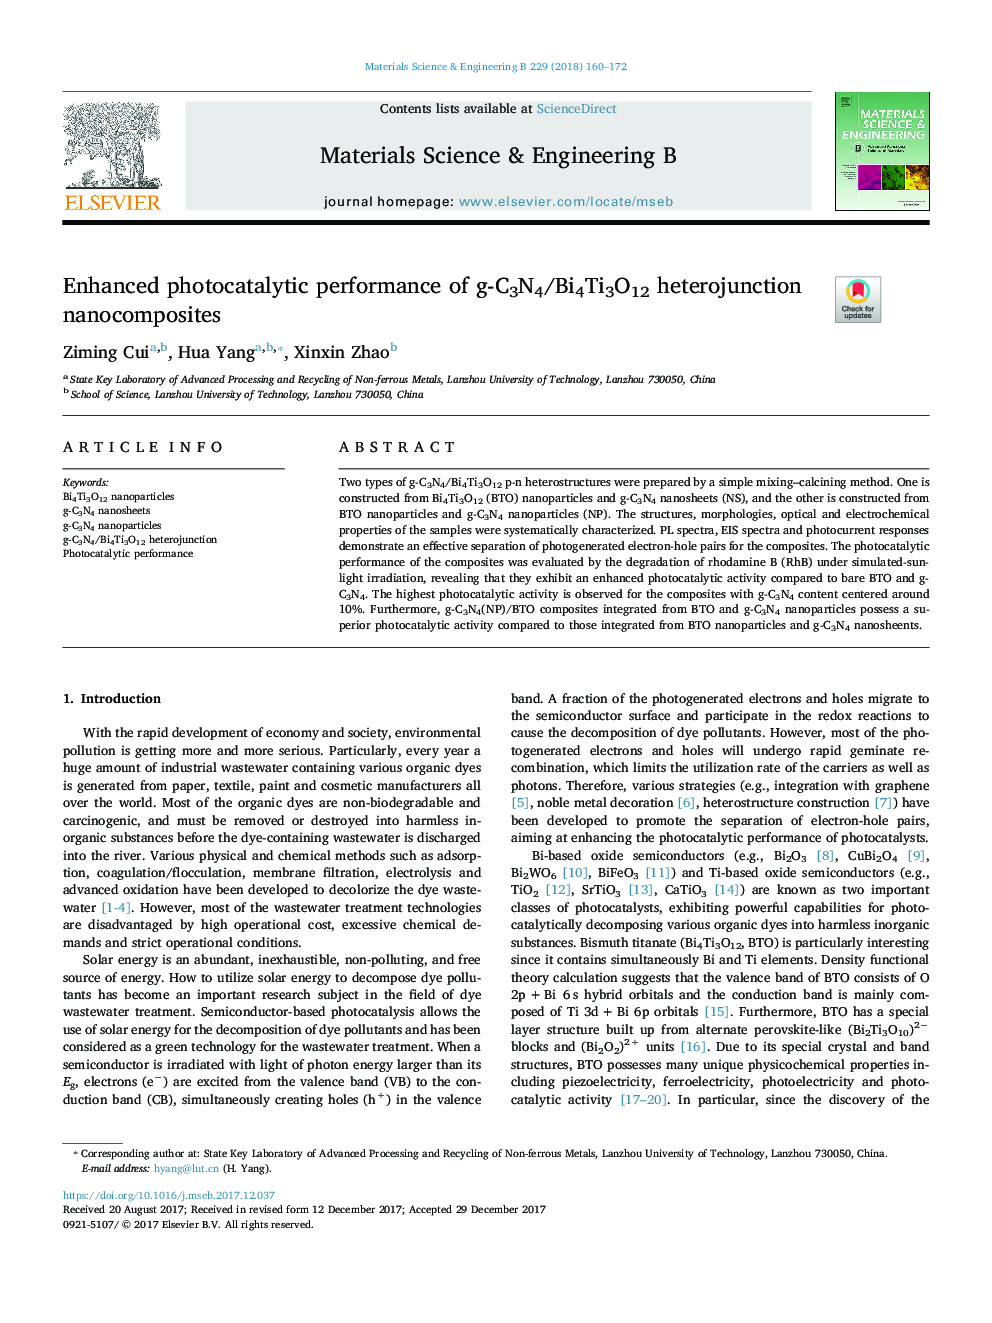 Enhanced photocatalytic performance of g-C3N4/Bi4Ti3O12 heterojunction nanocomposites